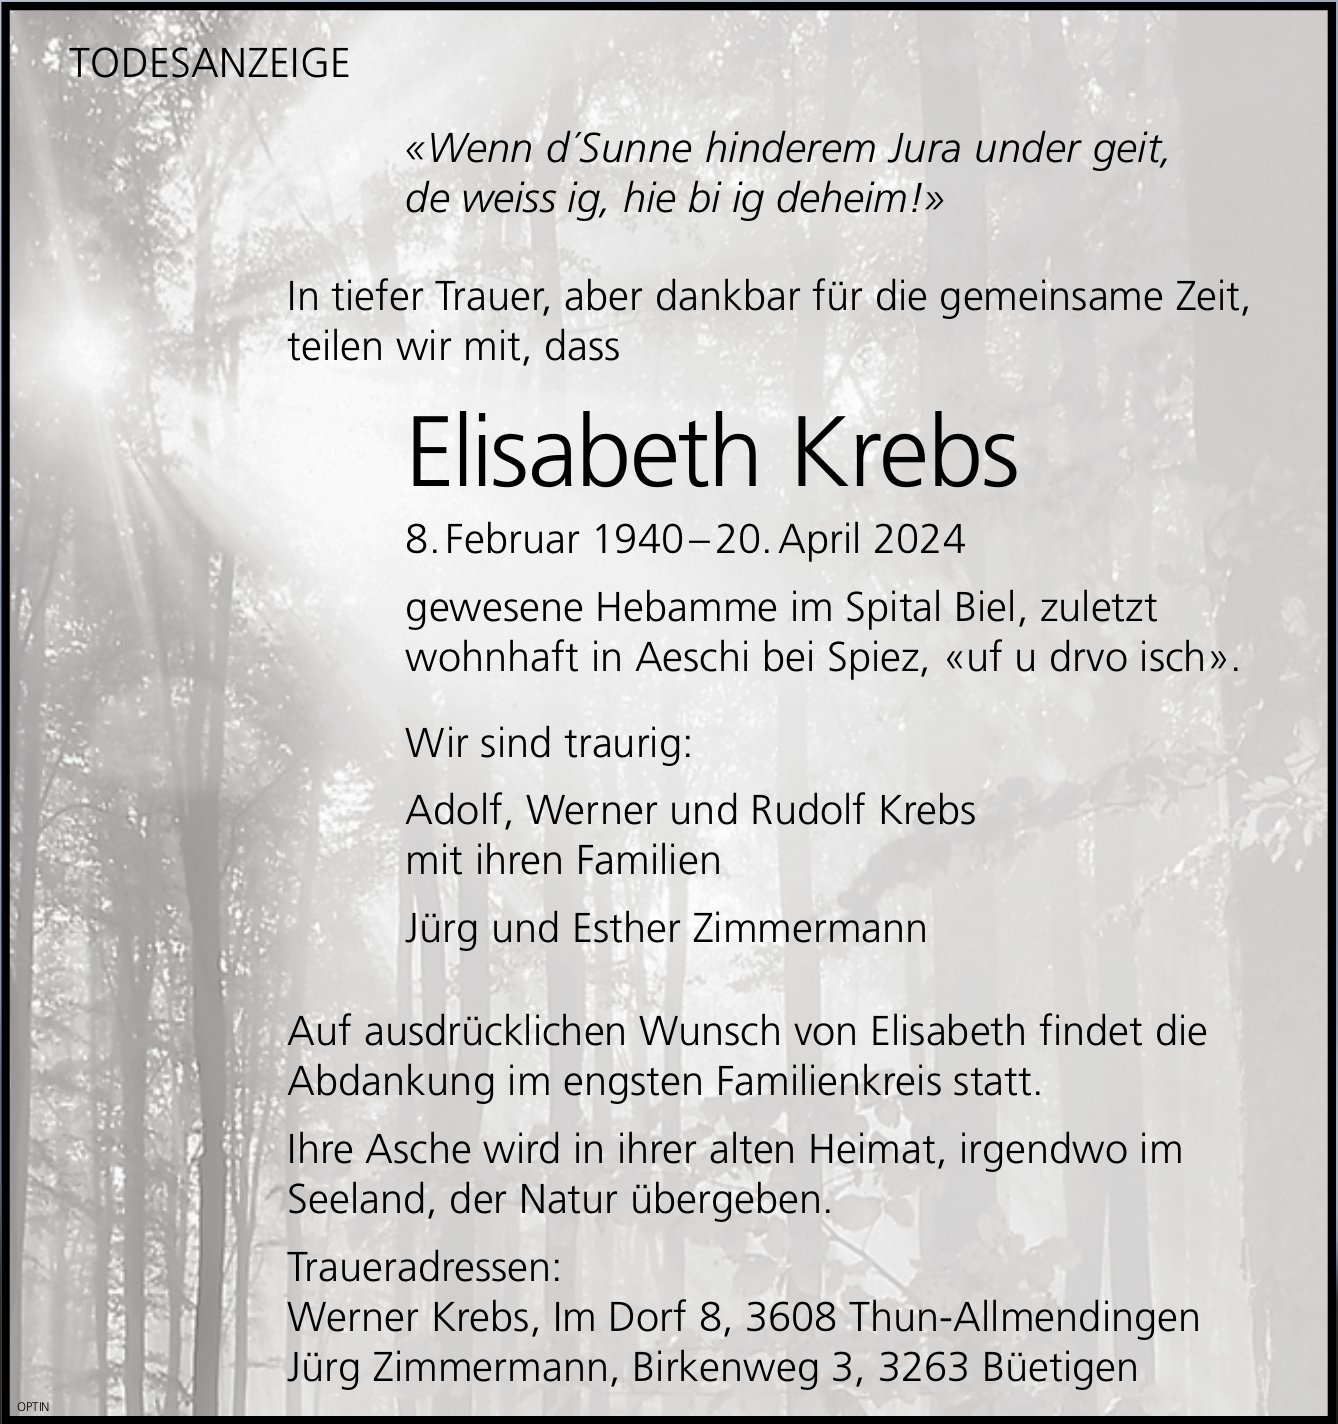 Elisabeth Krebs, April 2024 / TA